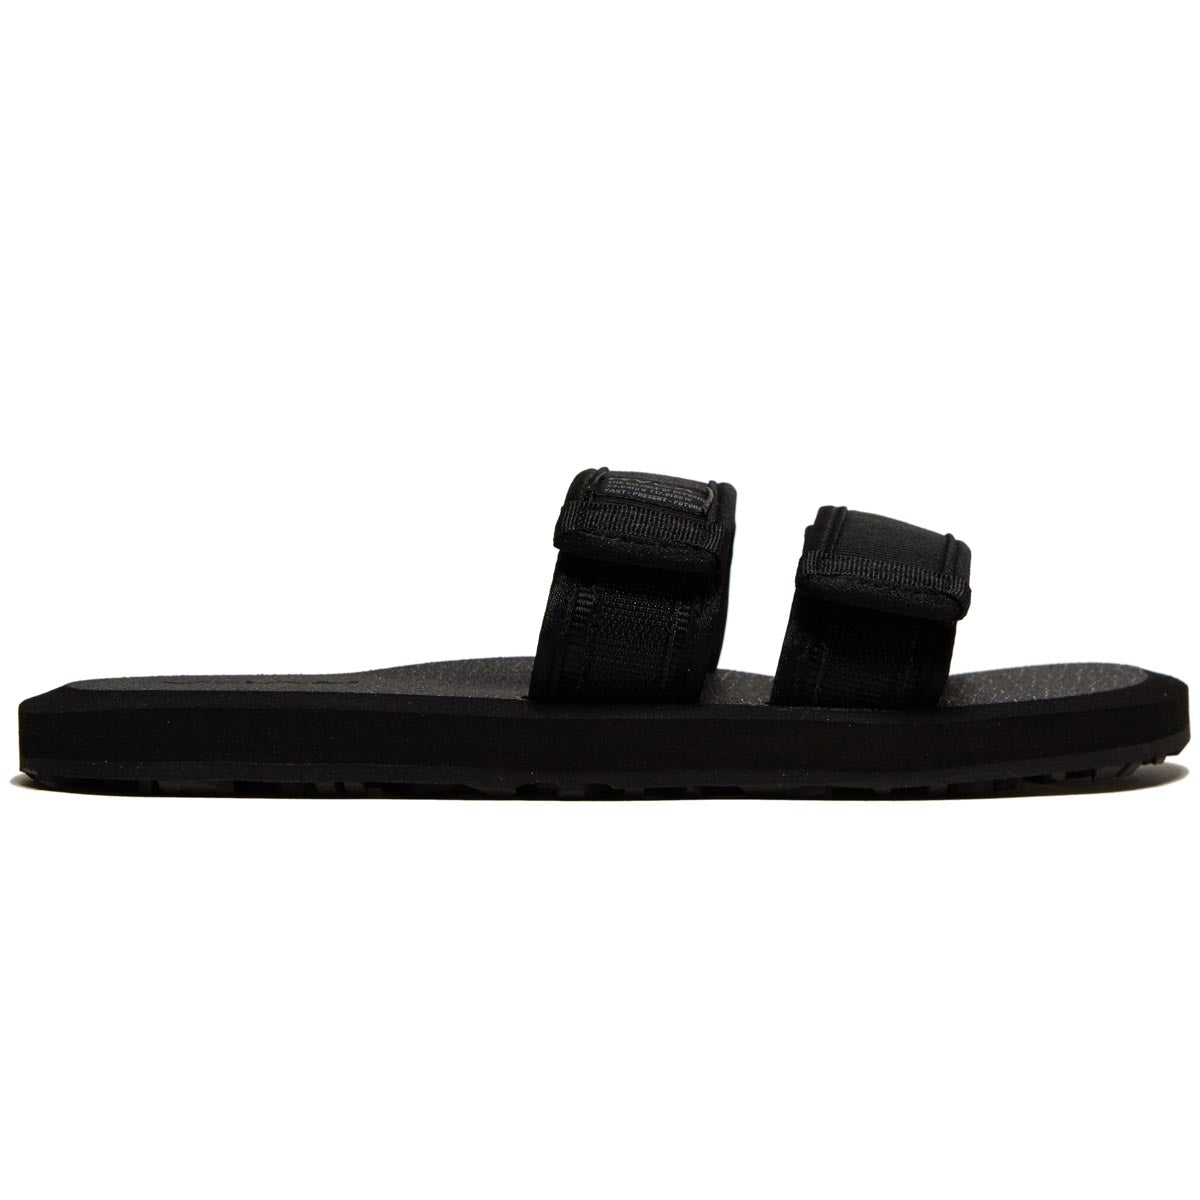 RVCA Peak Sandal Shoes - Black image 1